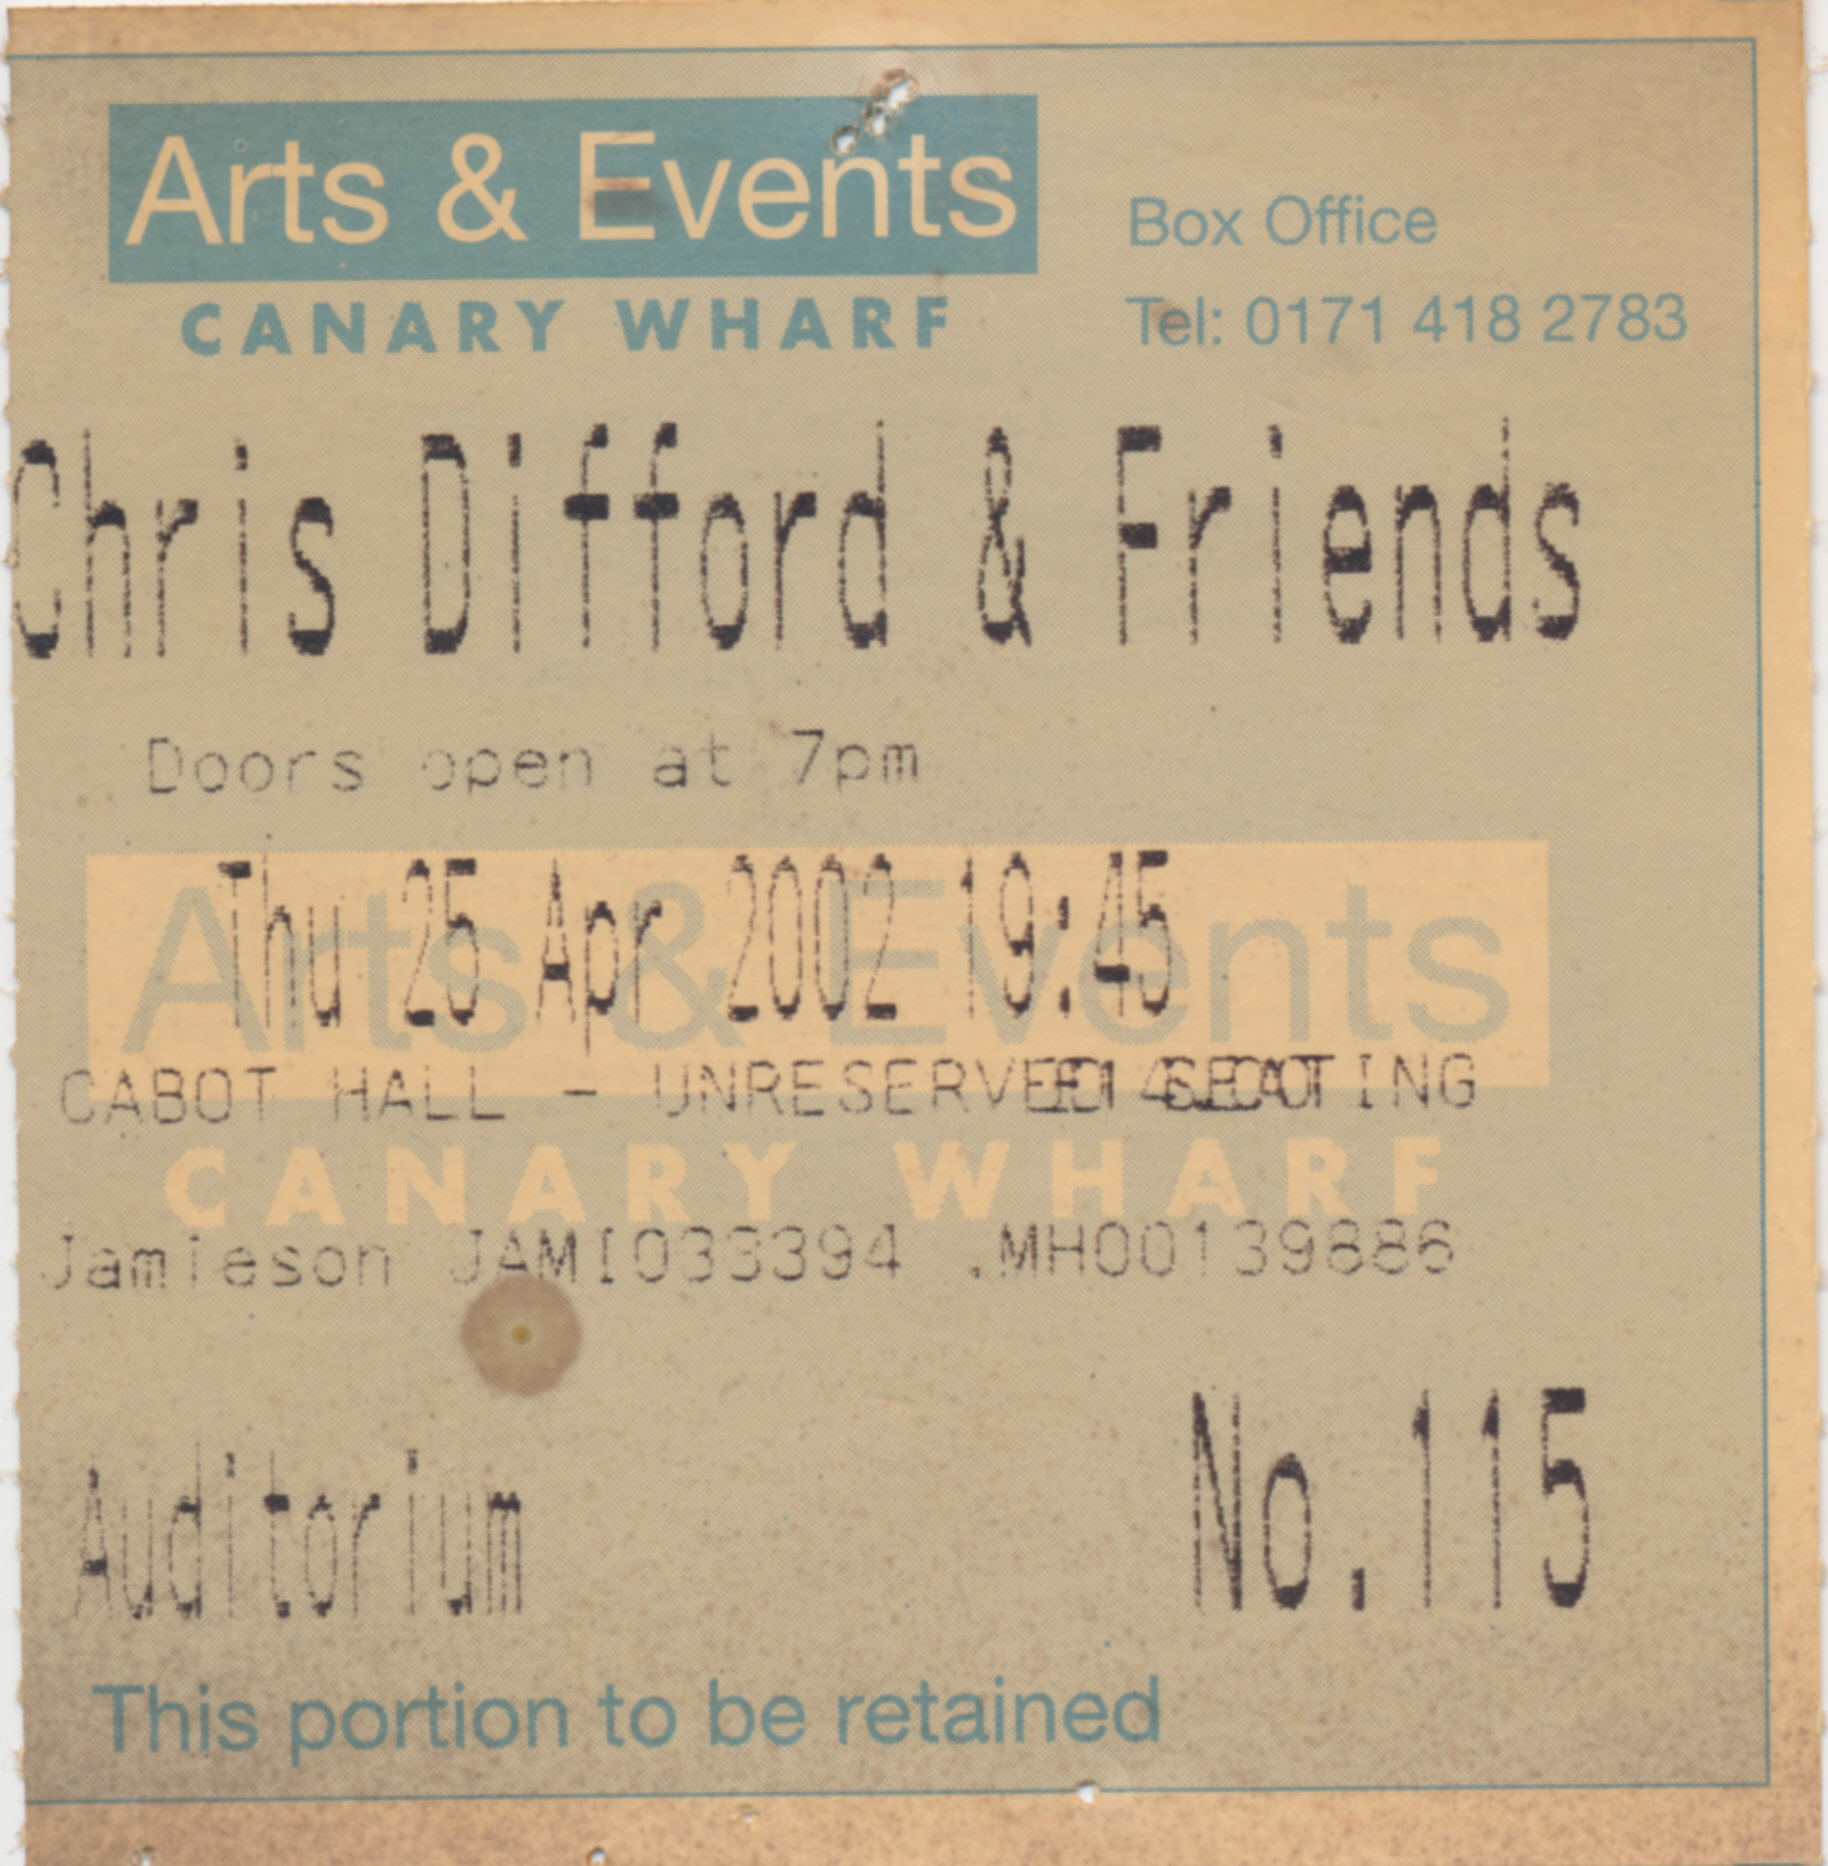 2002-04-25 ticket